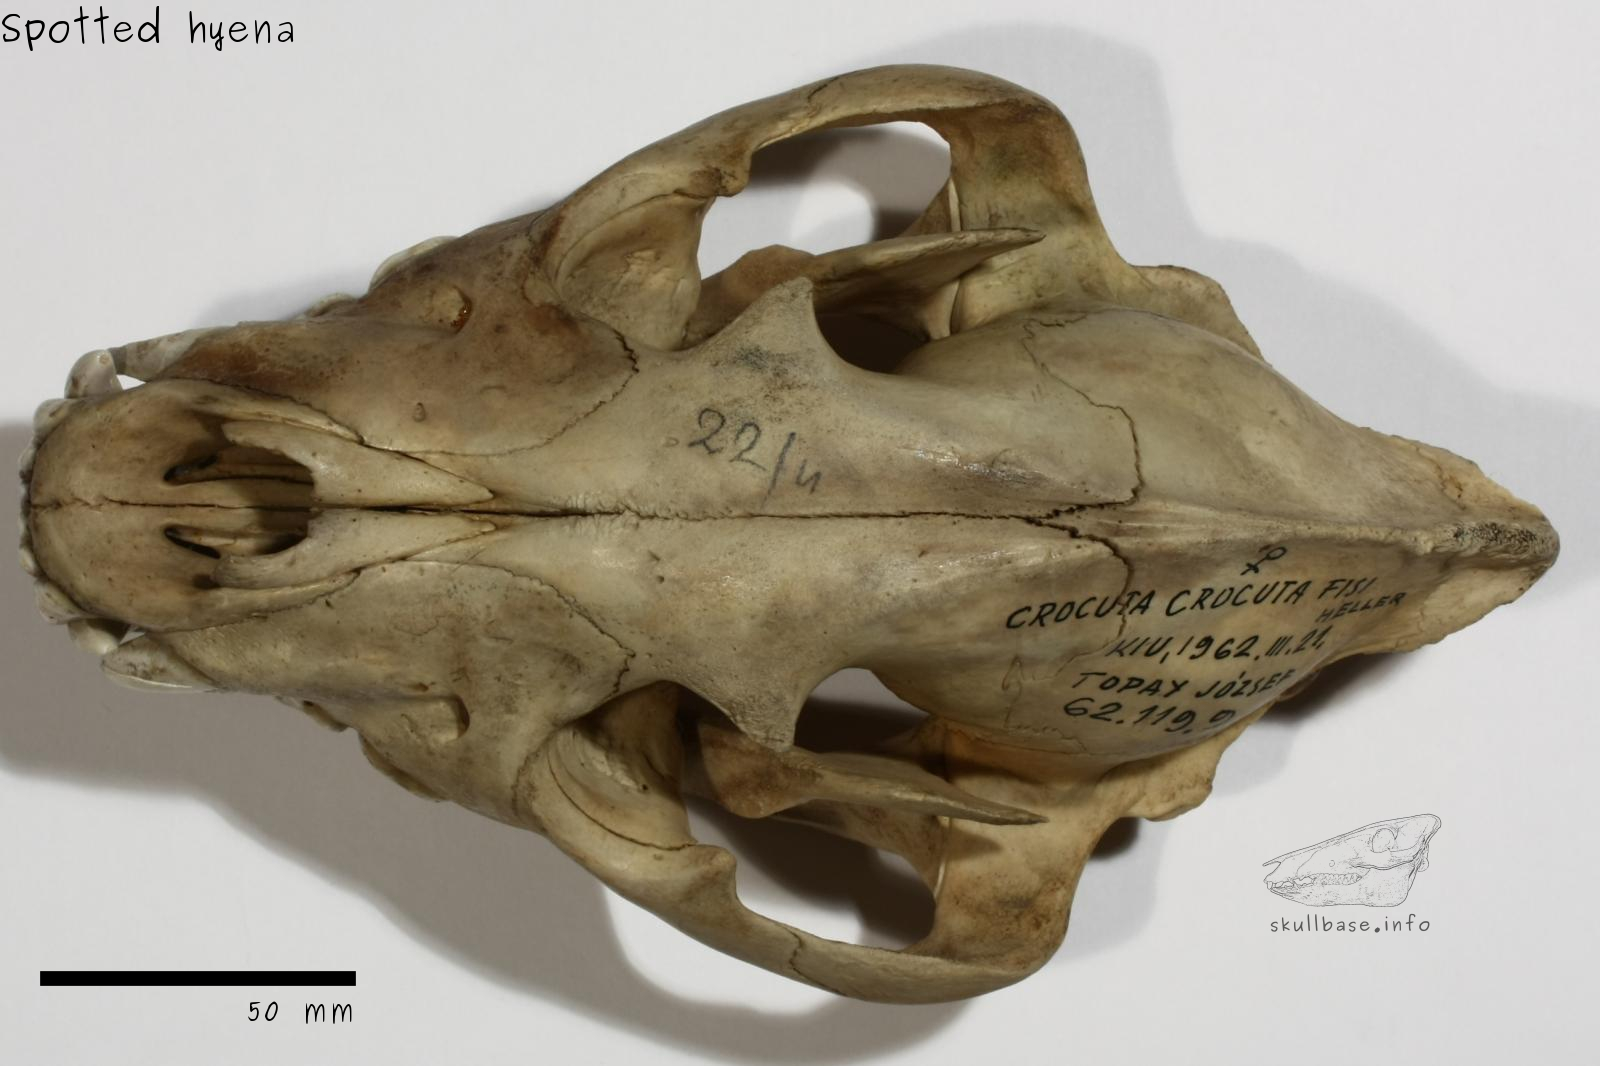 Spotted hyena (Crocuta crocuta) skull dorsal view